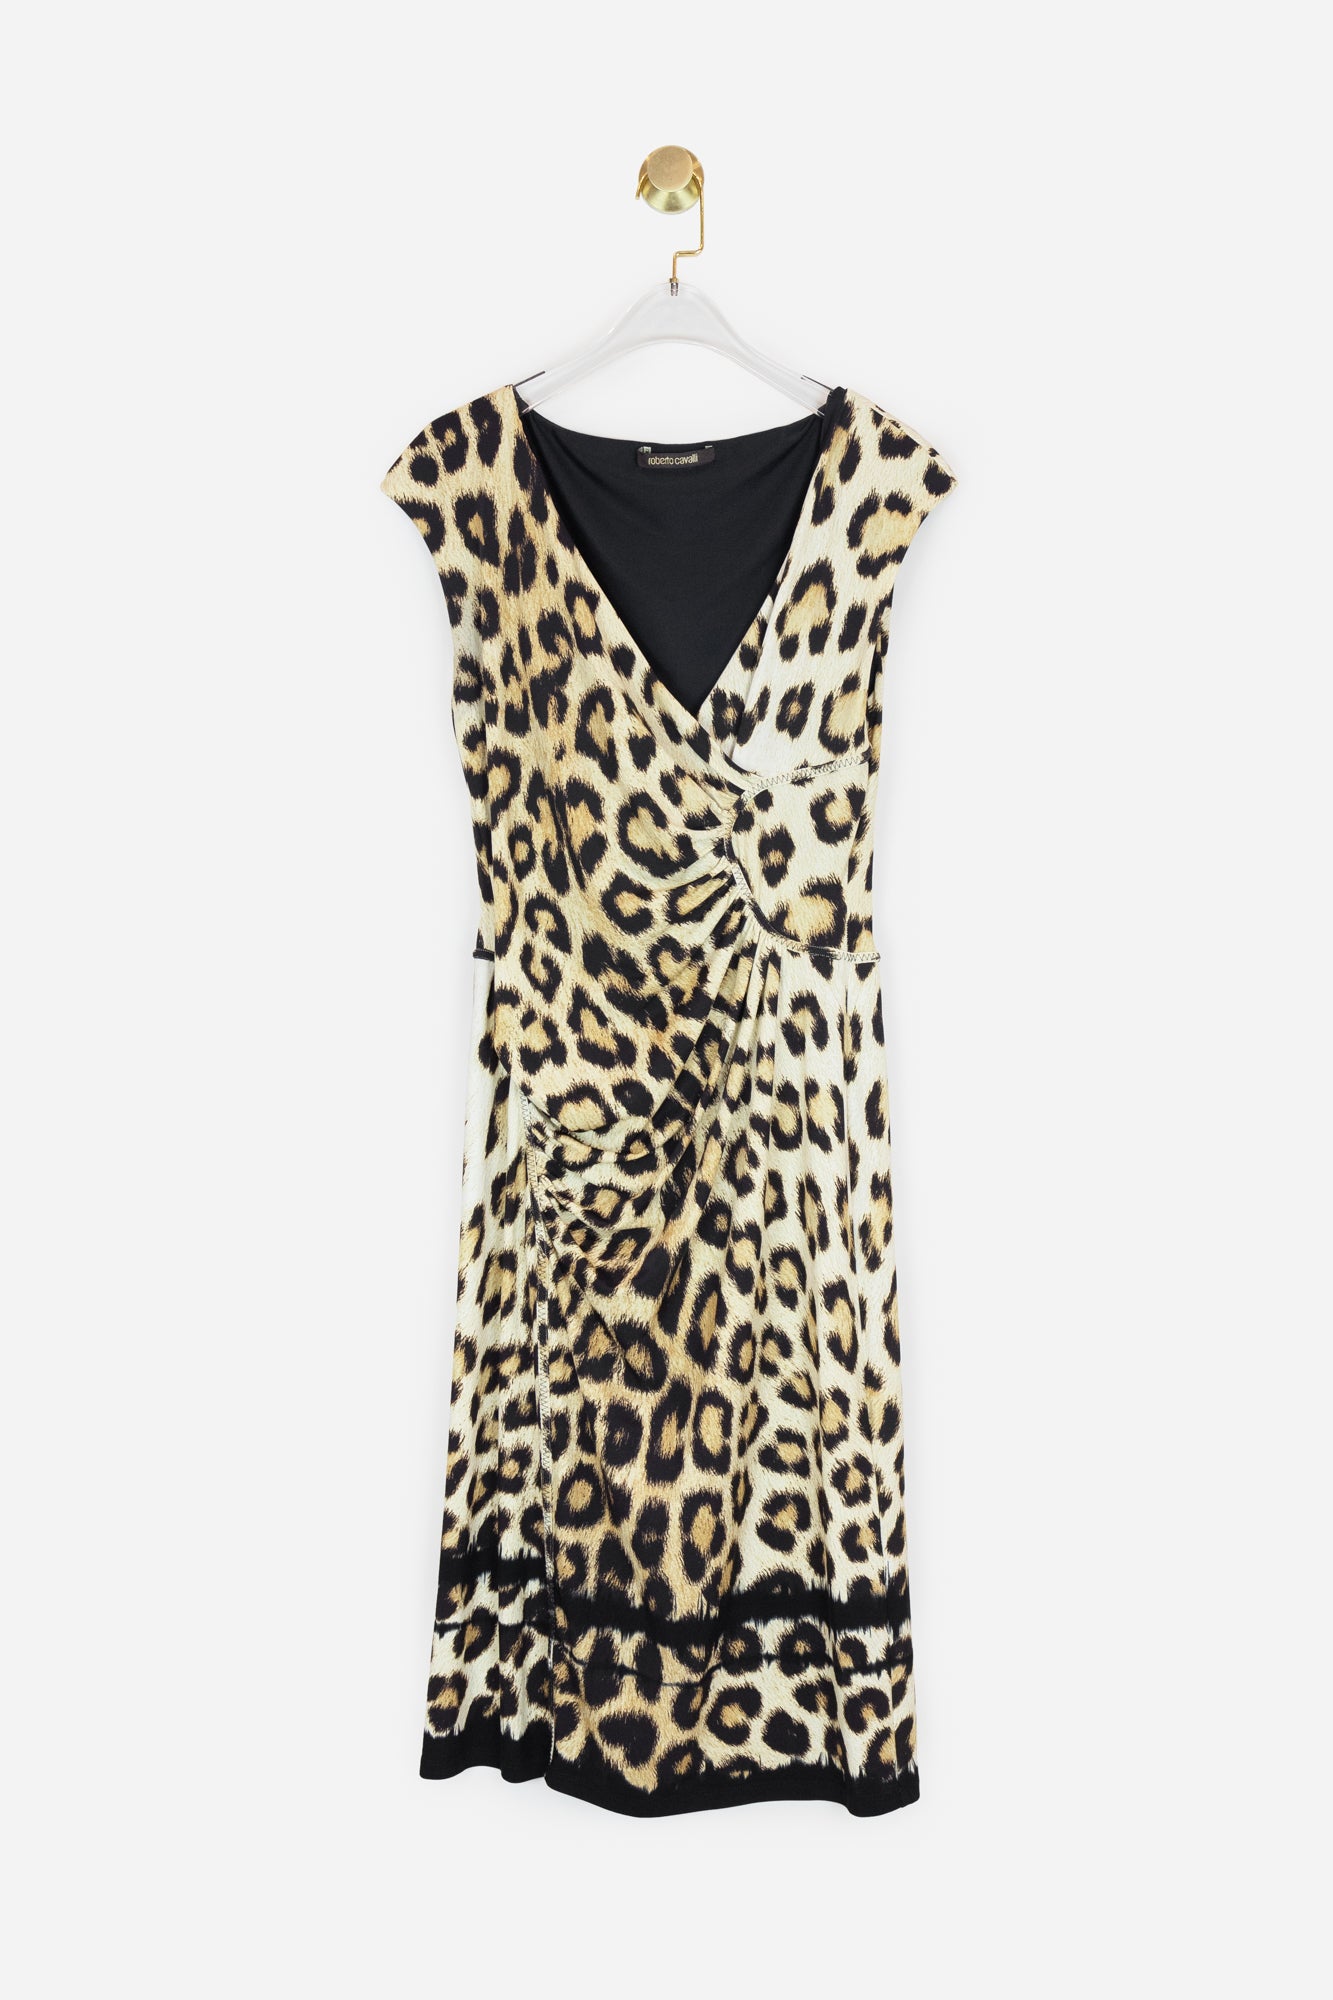 Leopard Knee-Length Dress